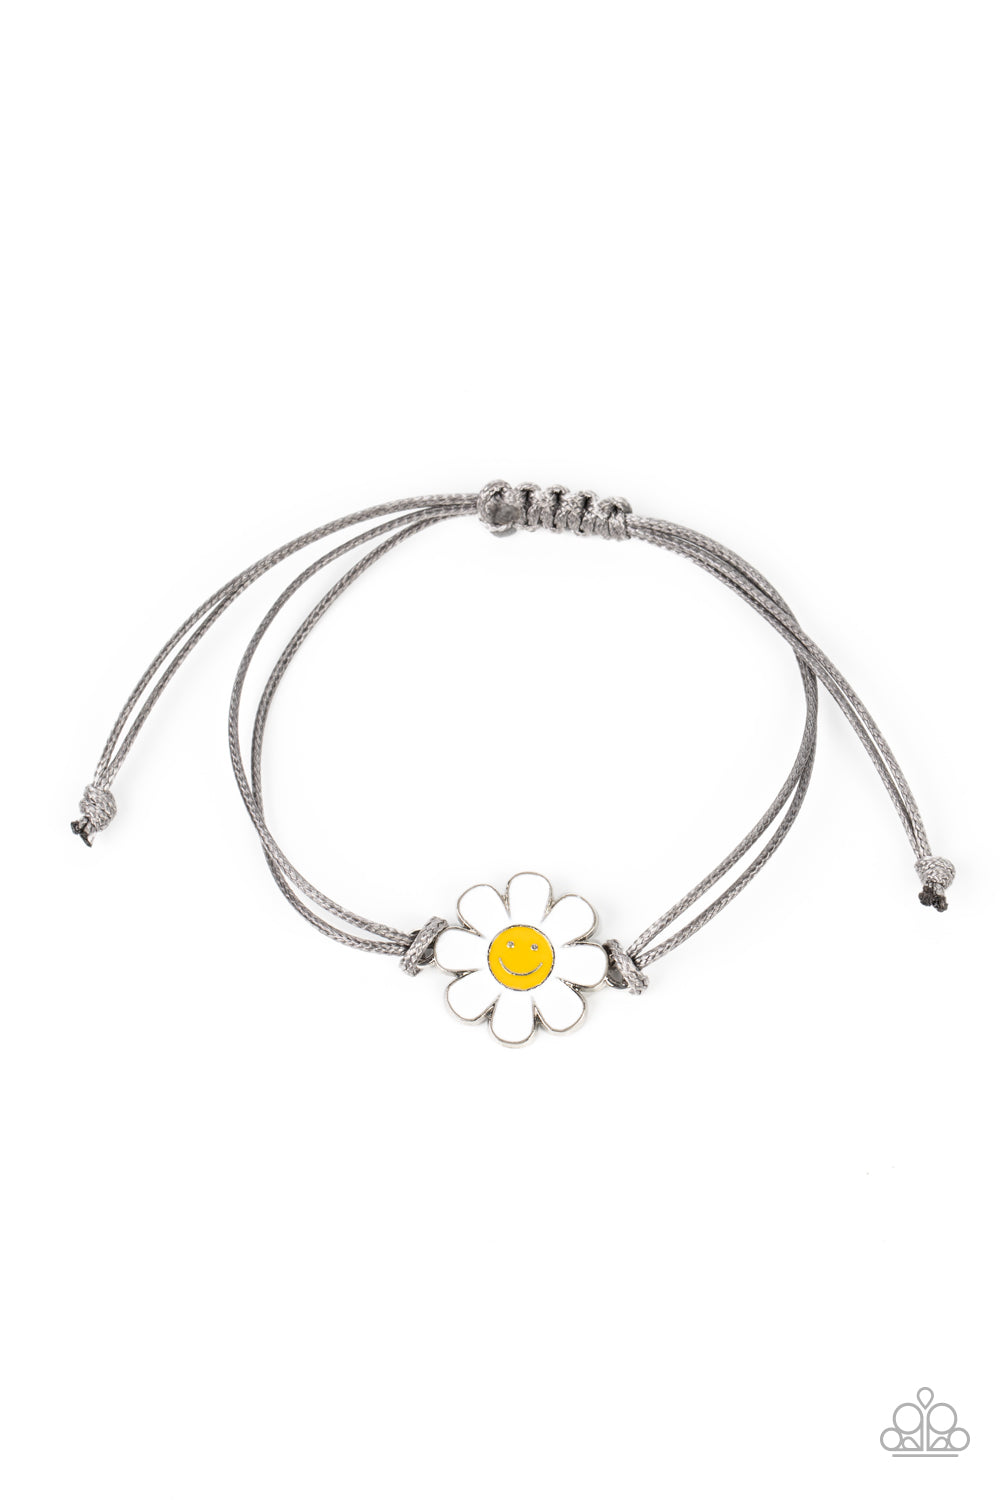 DAISY Little Thing - Silver (Daisy Charm) Bracelet